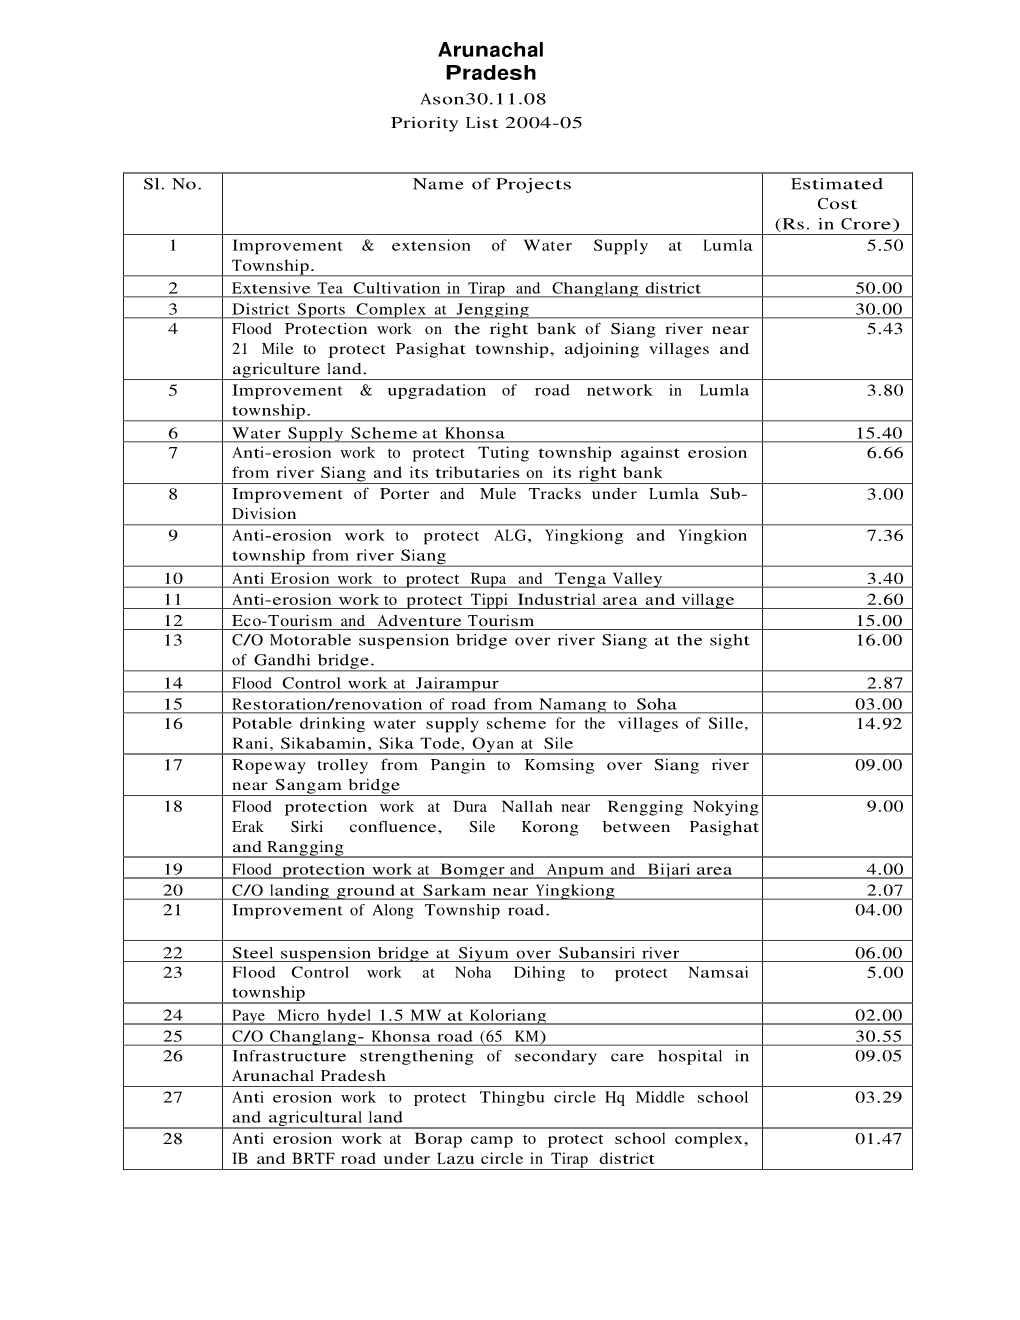 Arunachal Pradesh Ason30.11.08 Priority List 2004-05